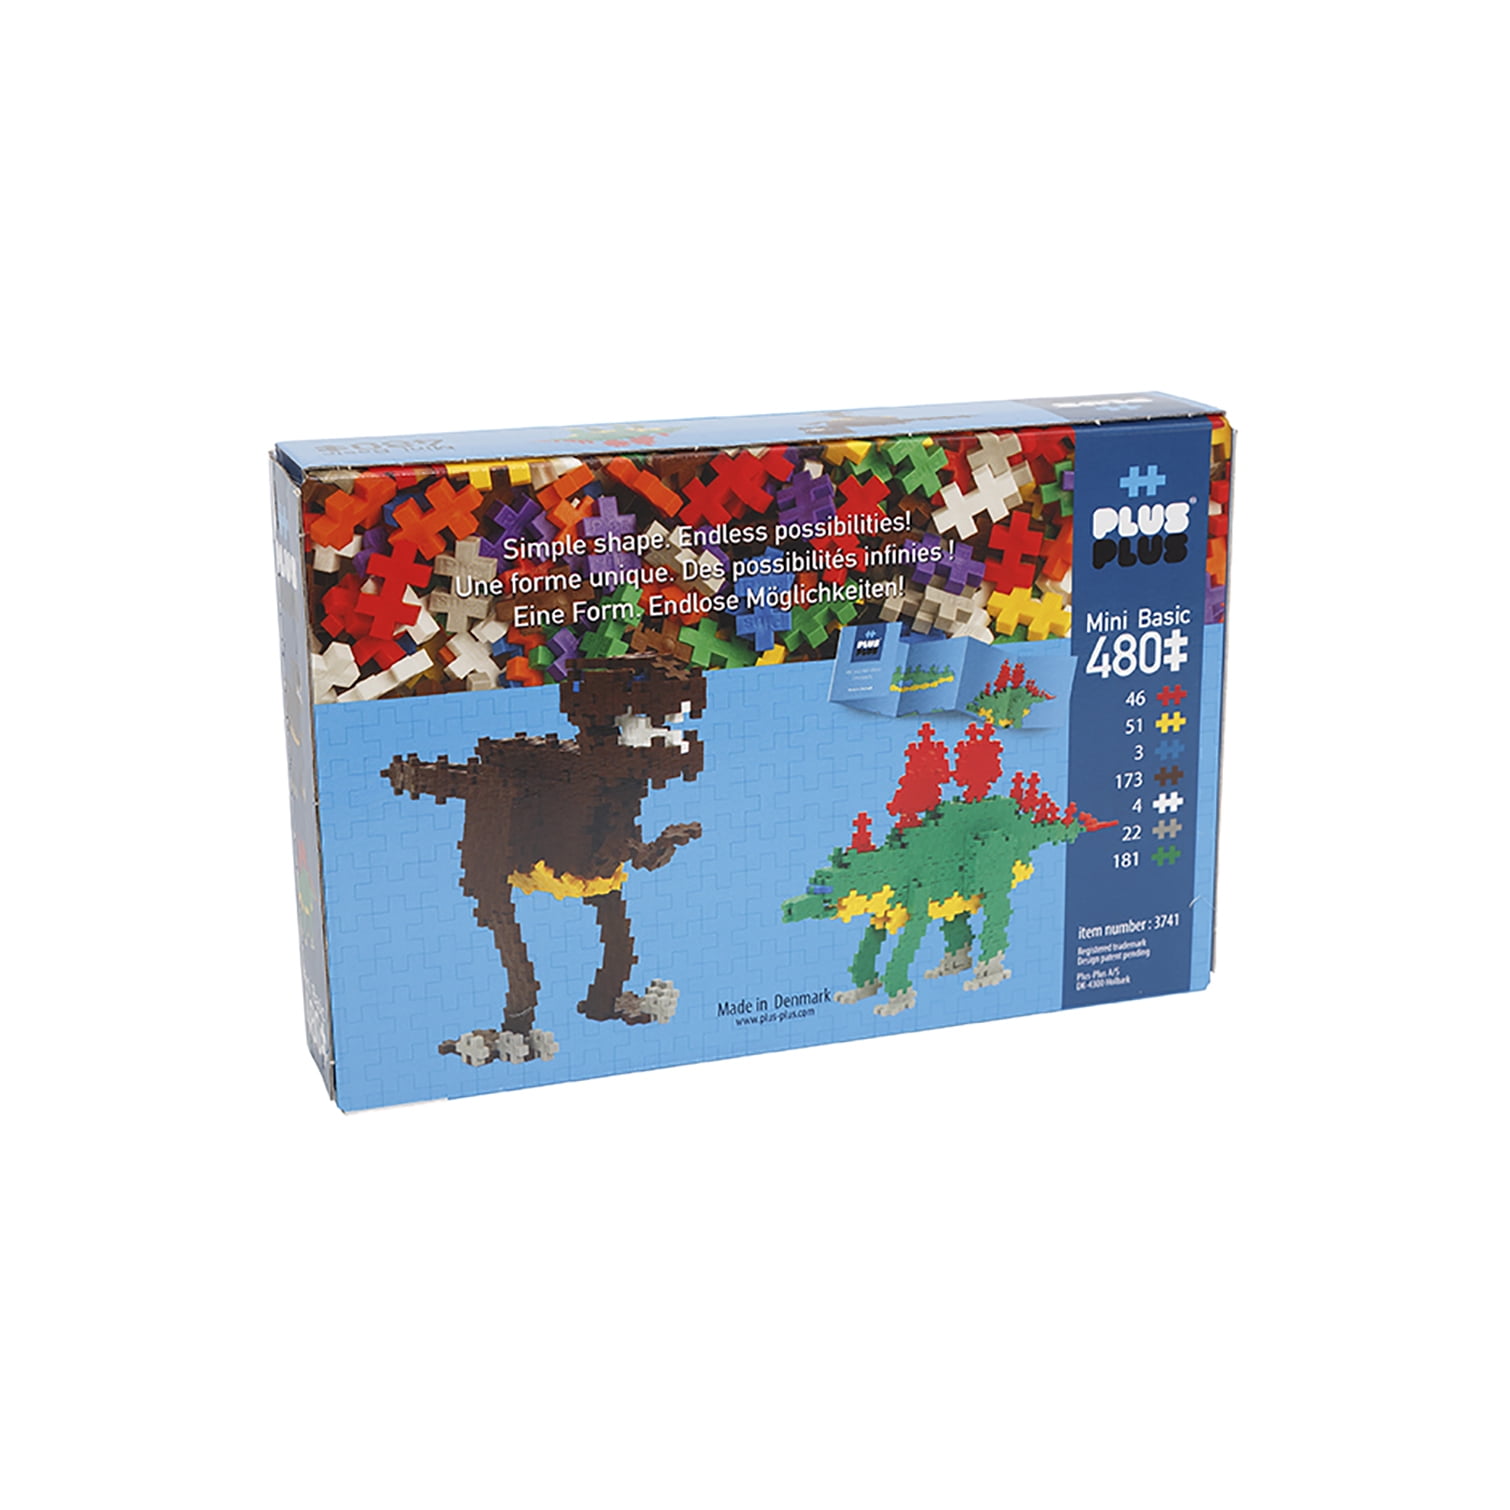 PLUS PLUS - T-Rex Dinosaur Tube - 70 pc Construction Building Stem/Steam  Toy, Kid Mini Puzzle Blocks